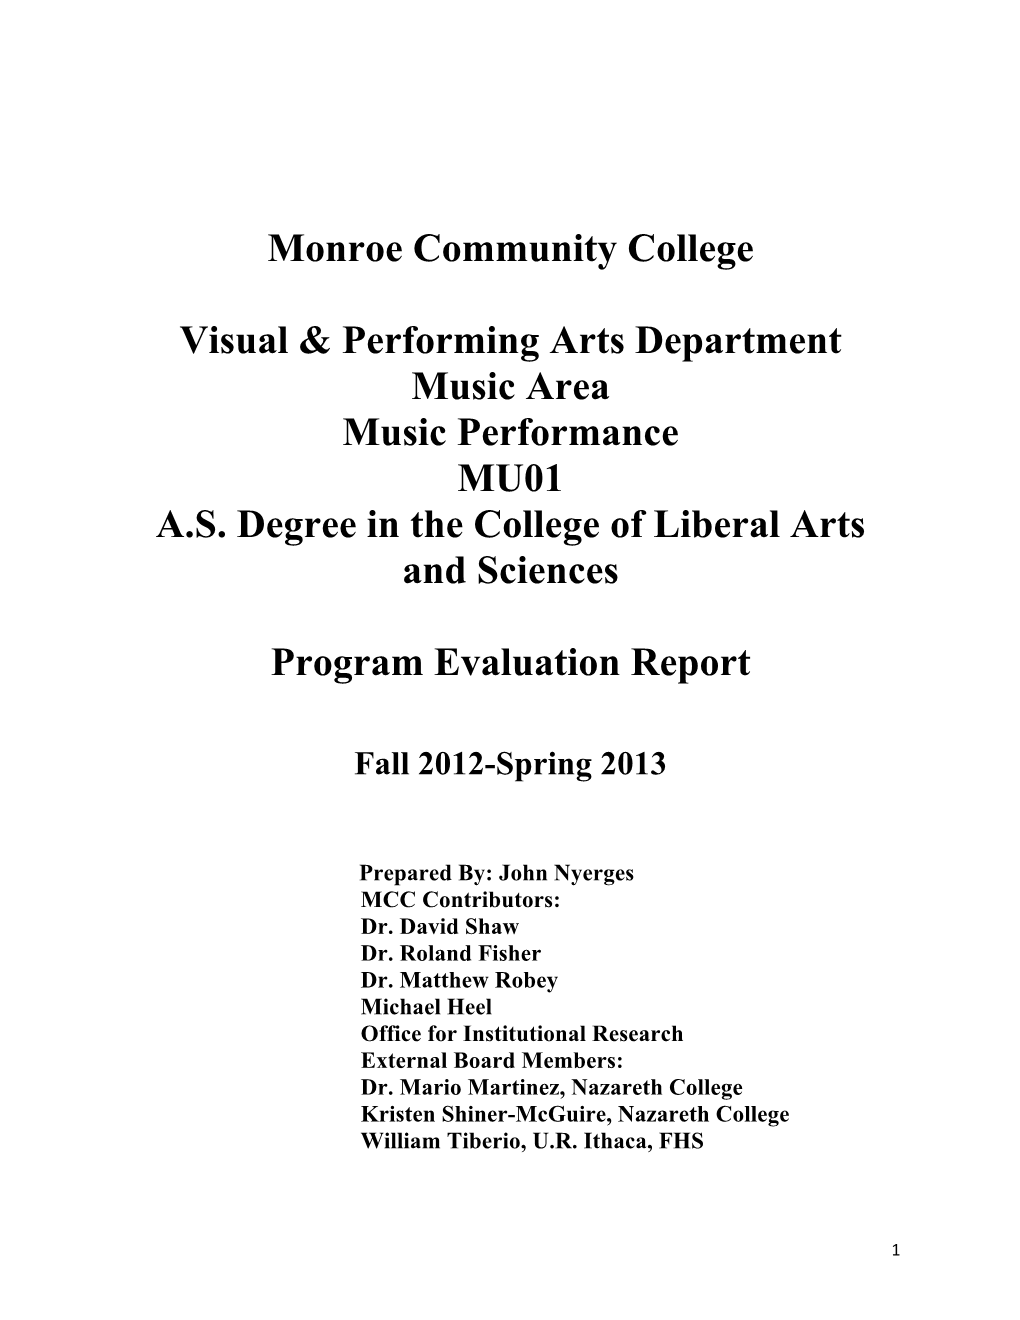 Monroe Community College Visual & Performing Arts Department Music